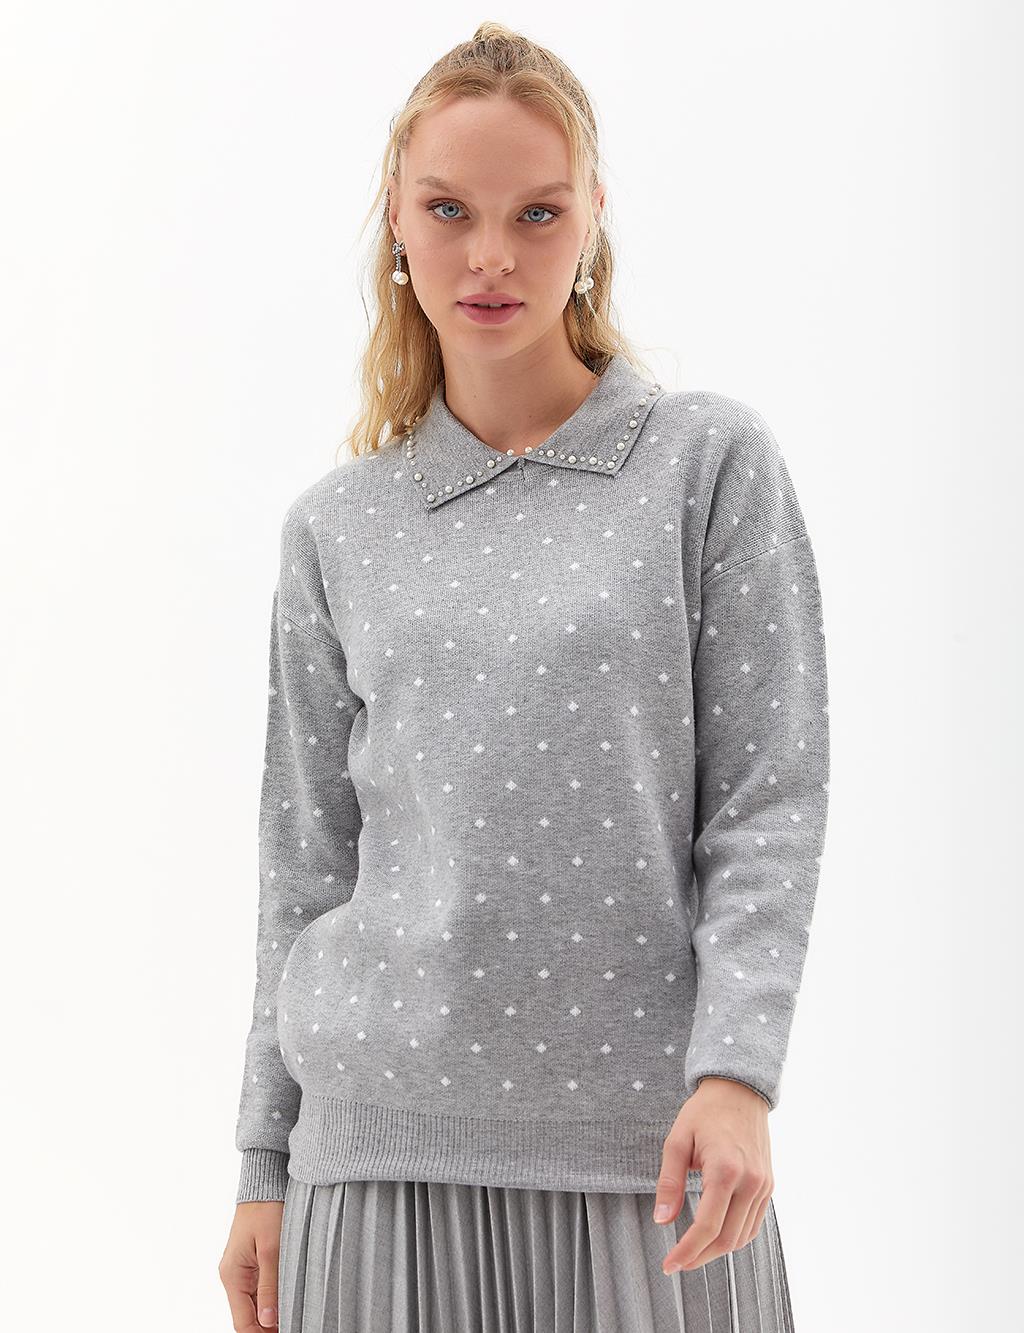 Polka Dot Bead Embroidered Knitwear Blouse Gray